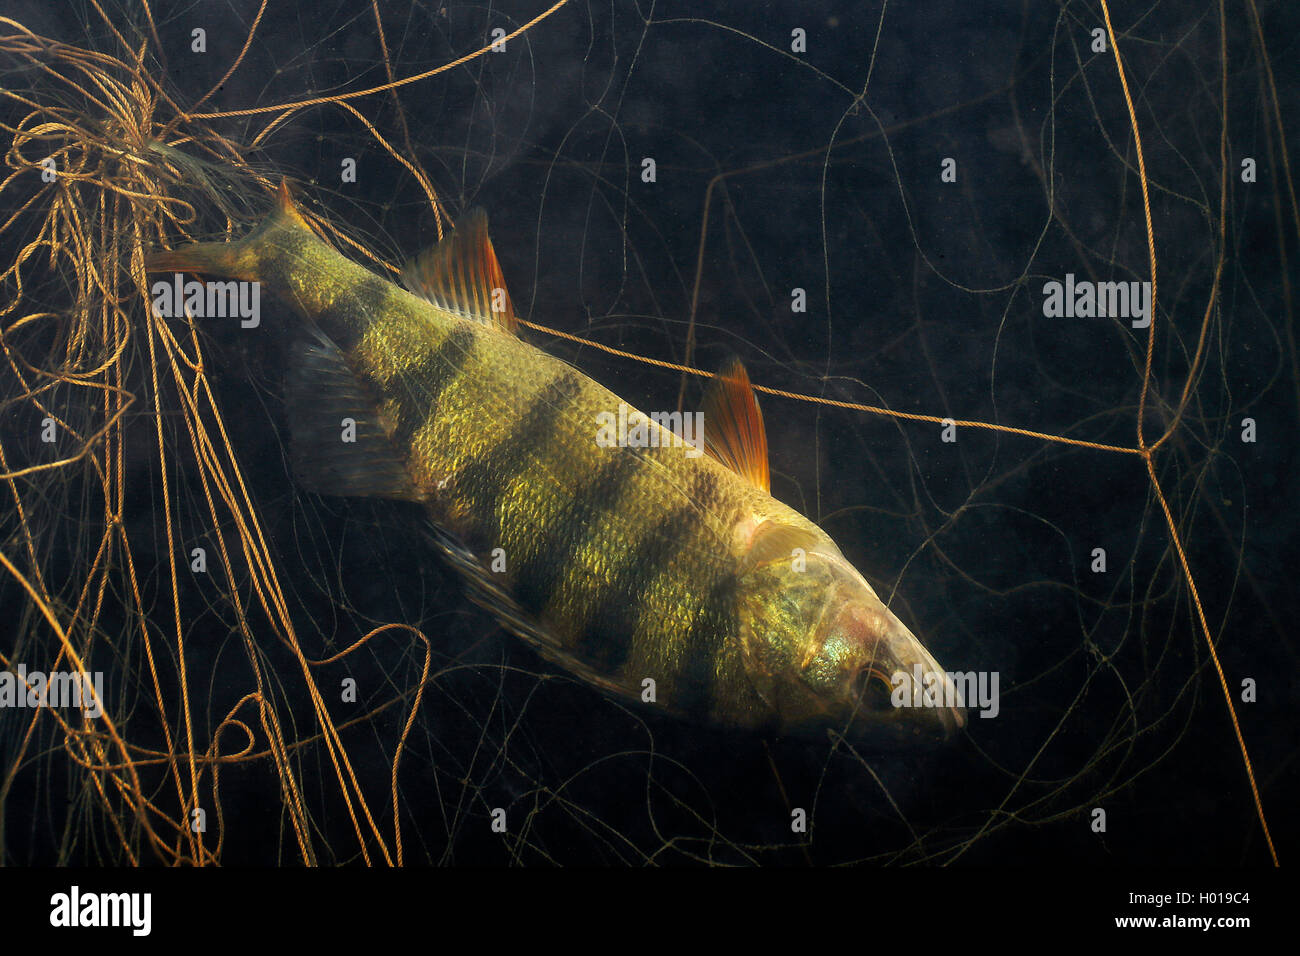 Perca Europea Redfin, perca, Perca (Perca fluviatilis), perca muerta en una red, vista lateral bajo el agua, Rumania, Delta del Danubio Foto de stock